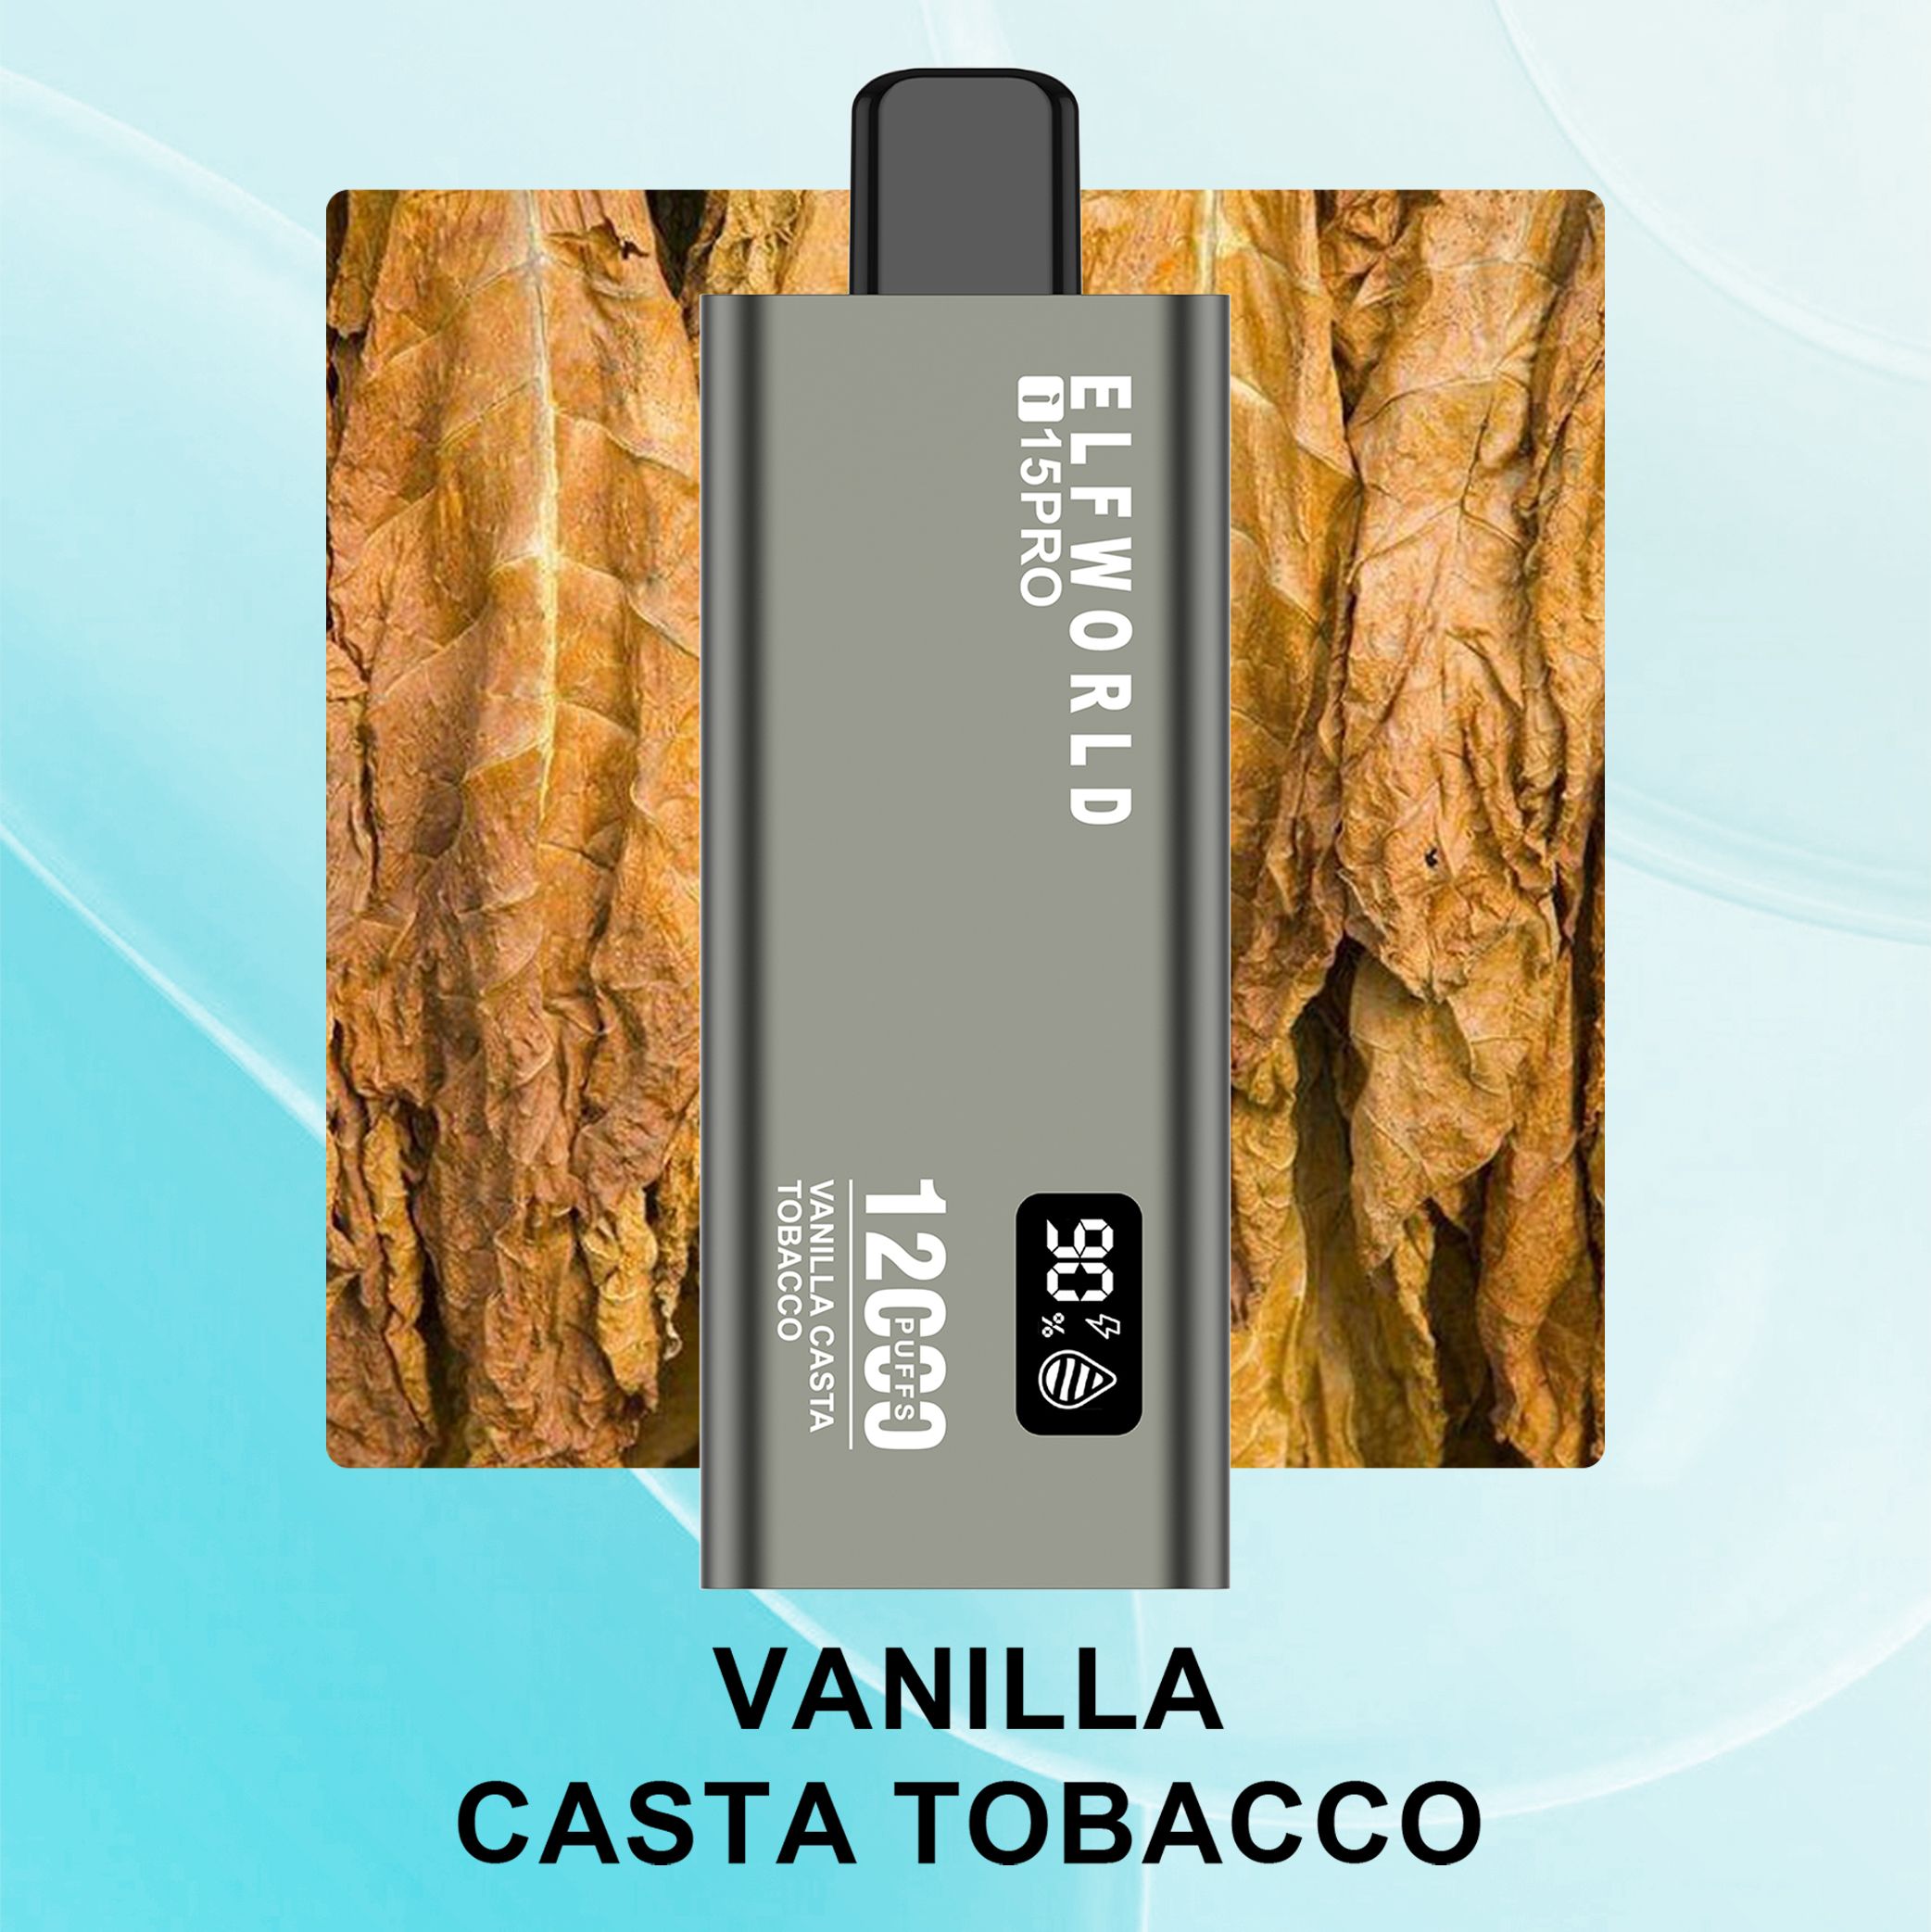 4. Vanilla Casta Tobacco